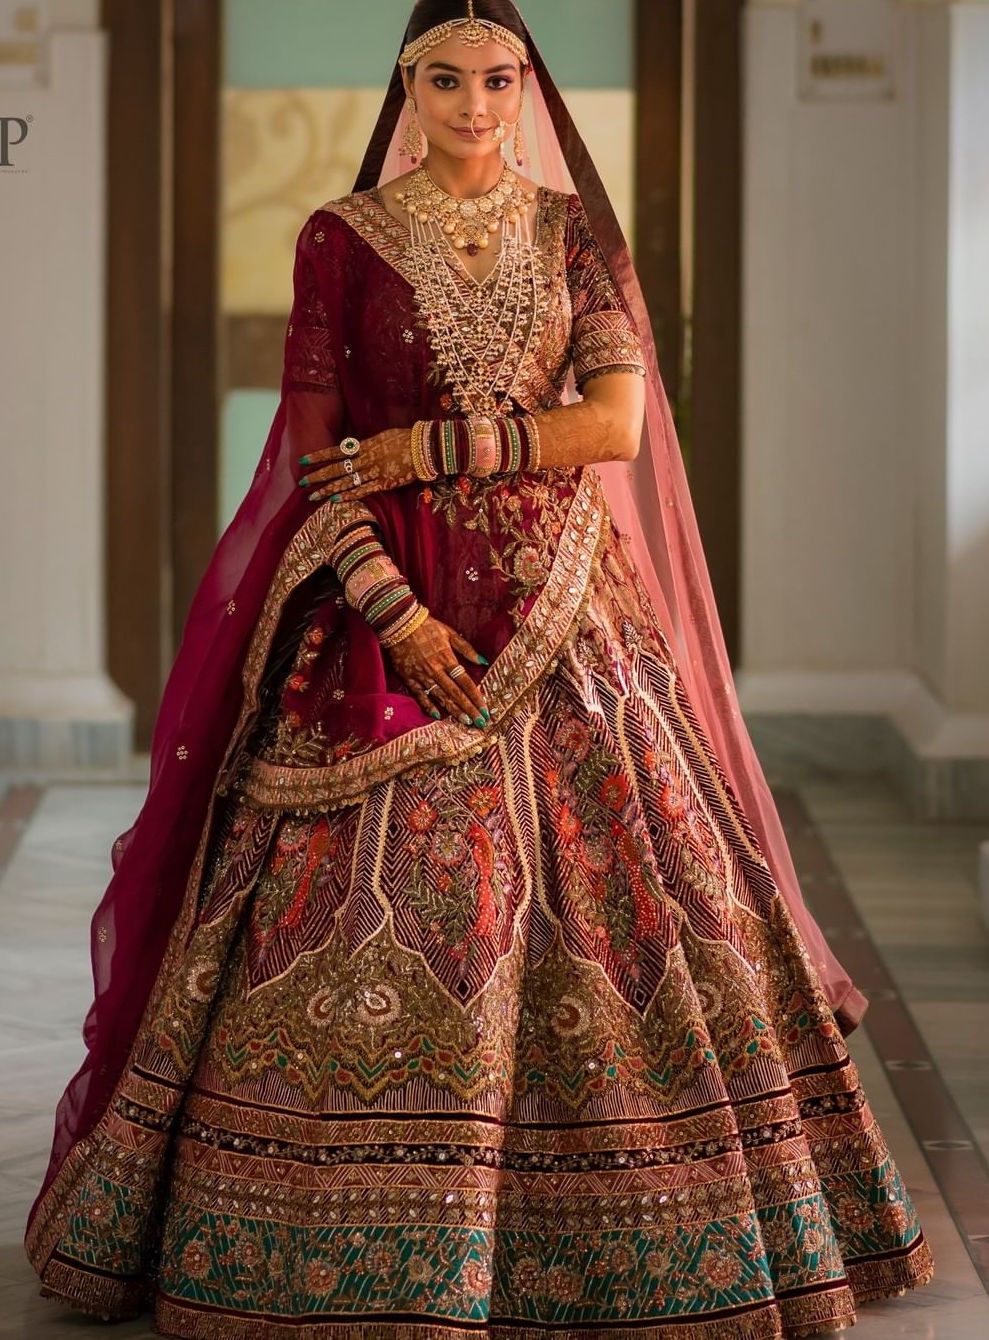 Marwar style regal bridal lehenga in dark maroon